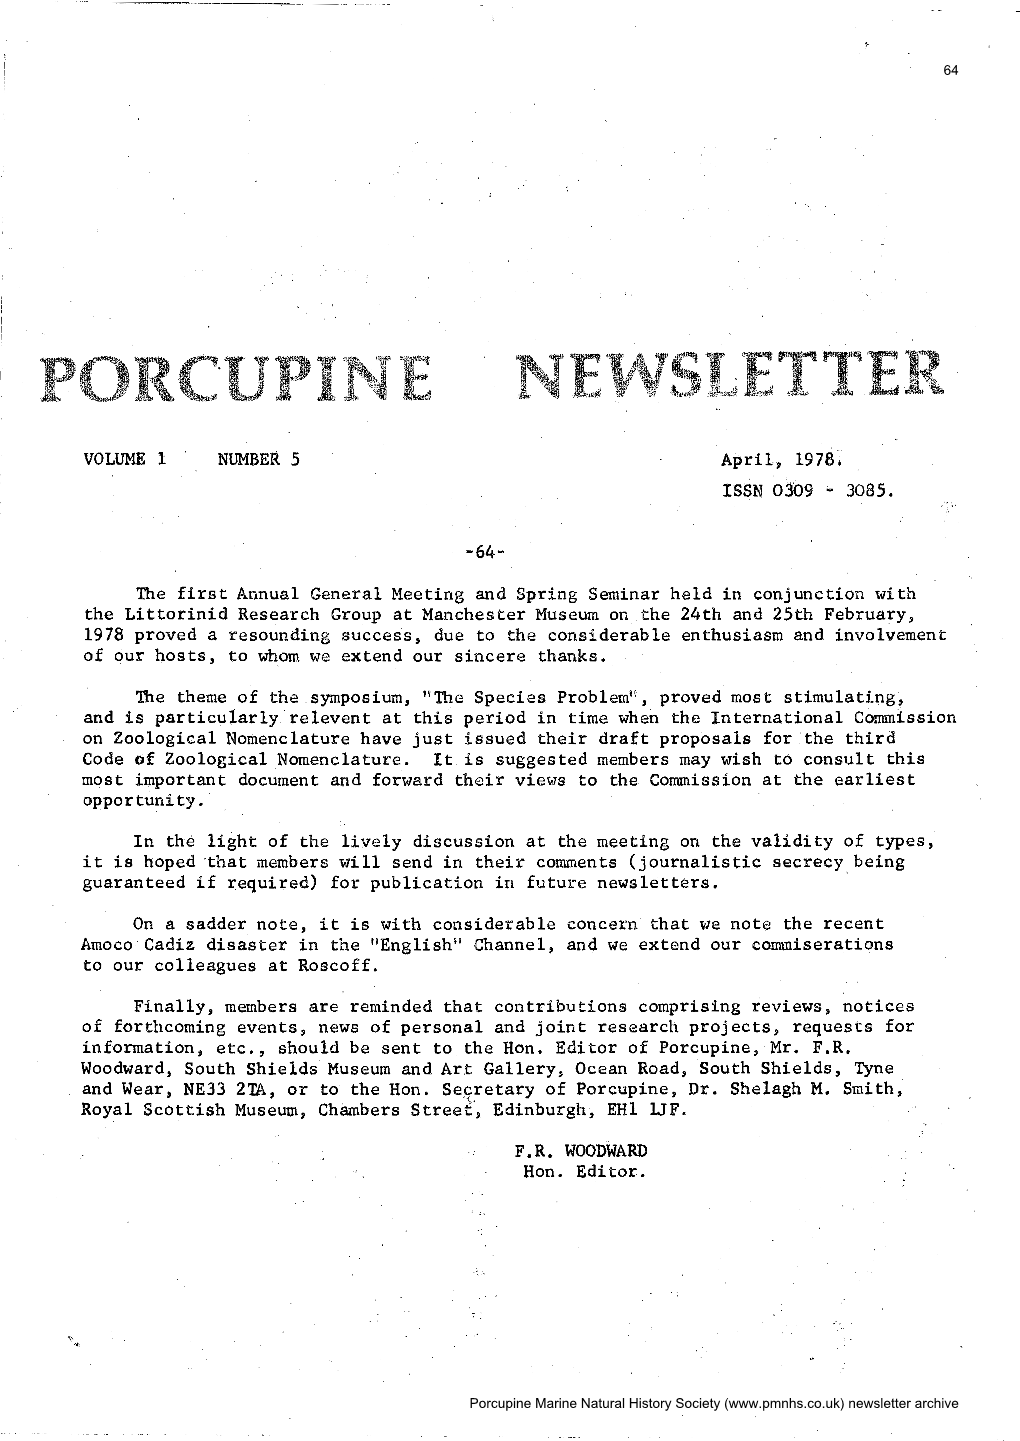 Porcupine Newsletter, Vol. 1 No. 5, April 1978